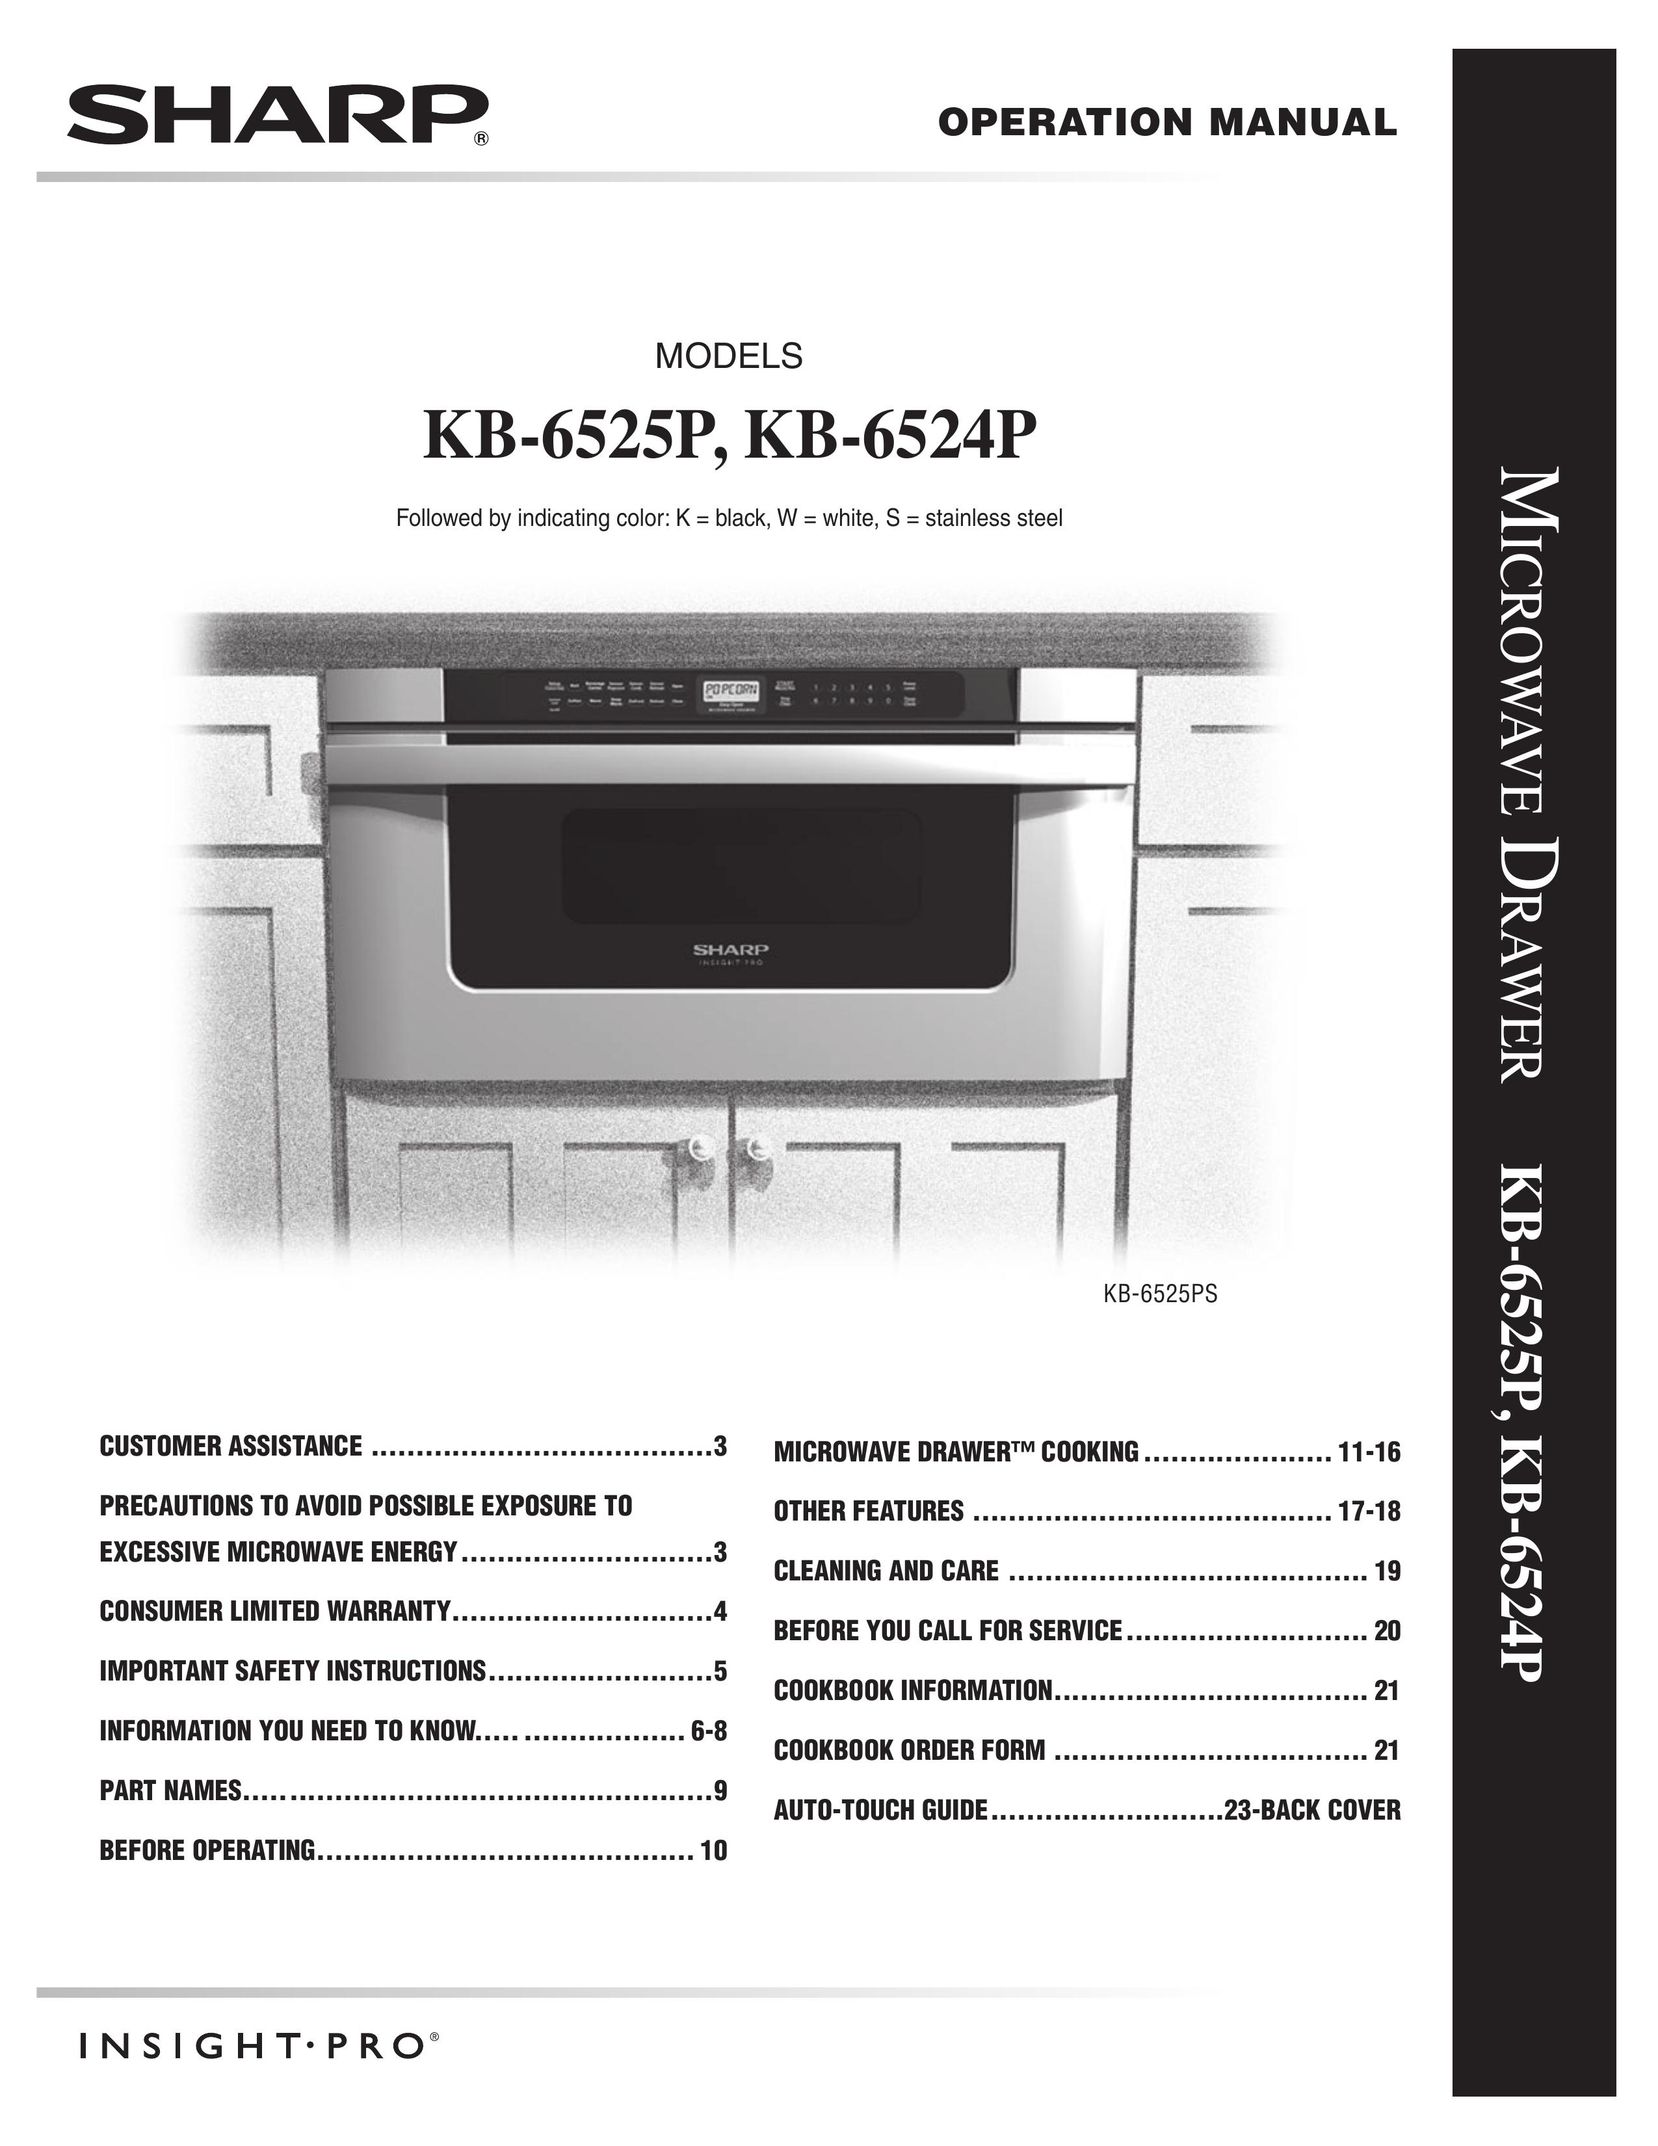 Sharp KB6525PK Microwave Oven User Manual